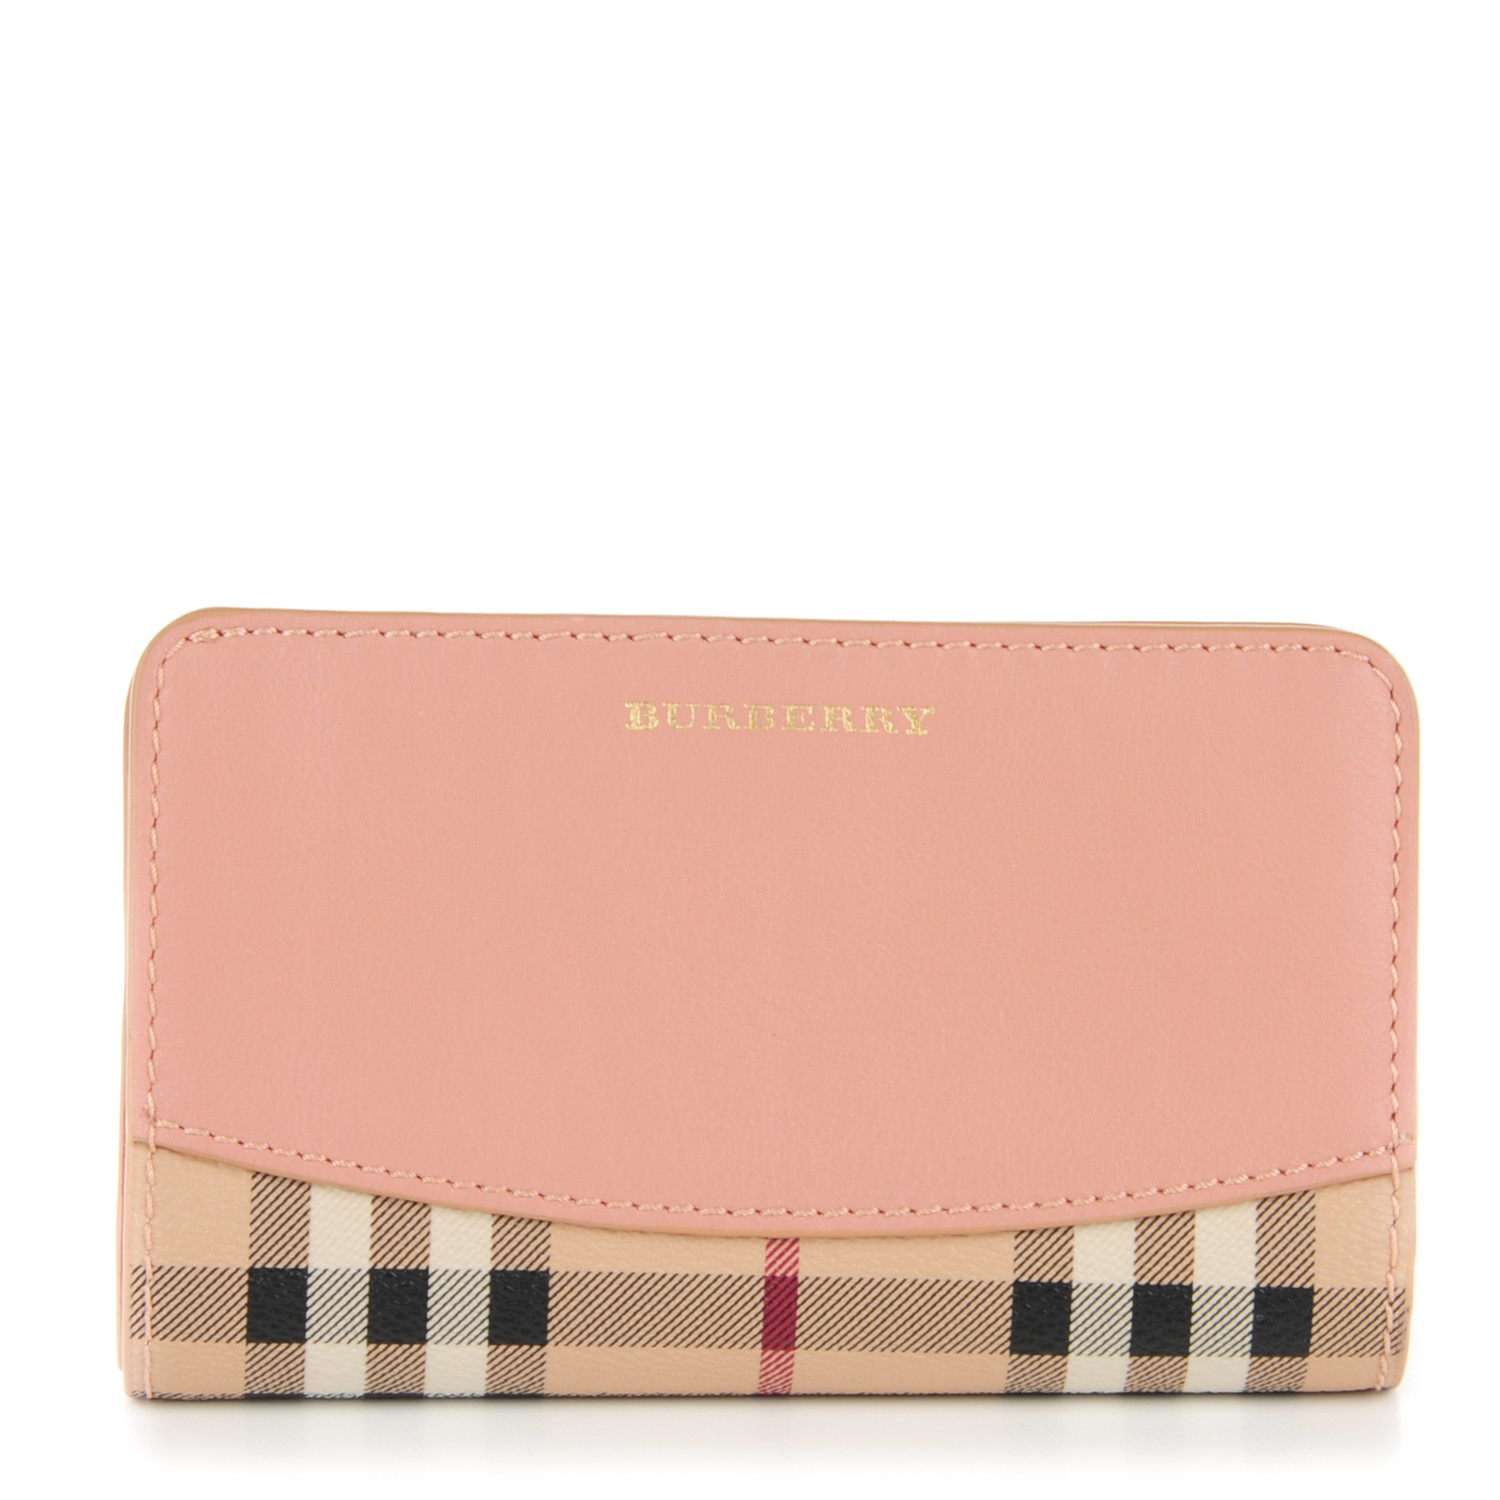 burberry wallet pink